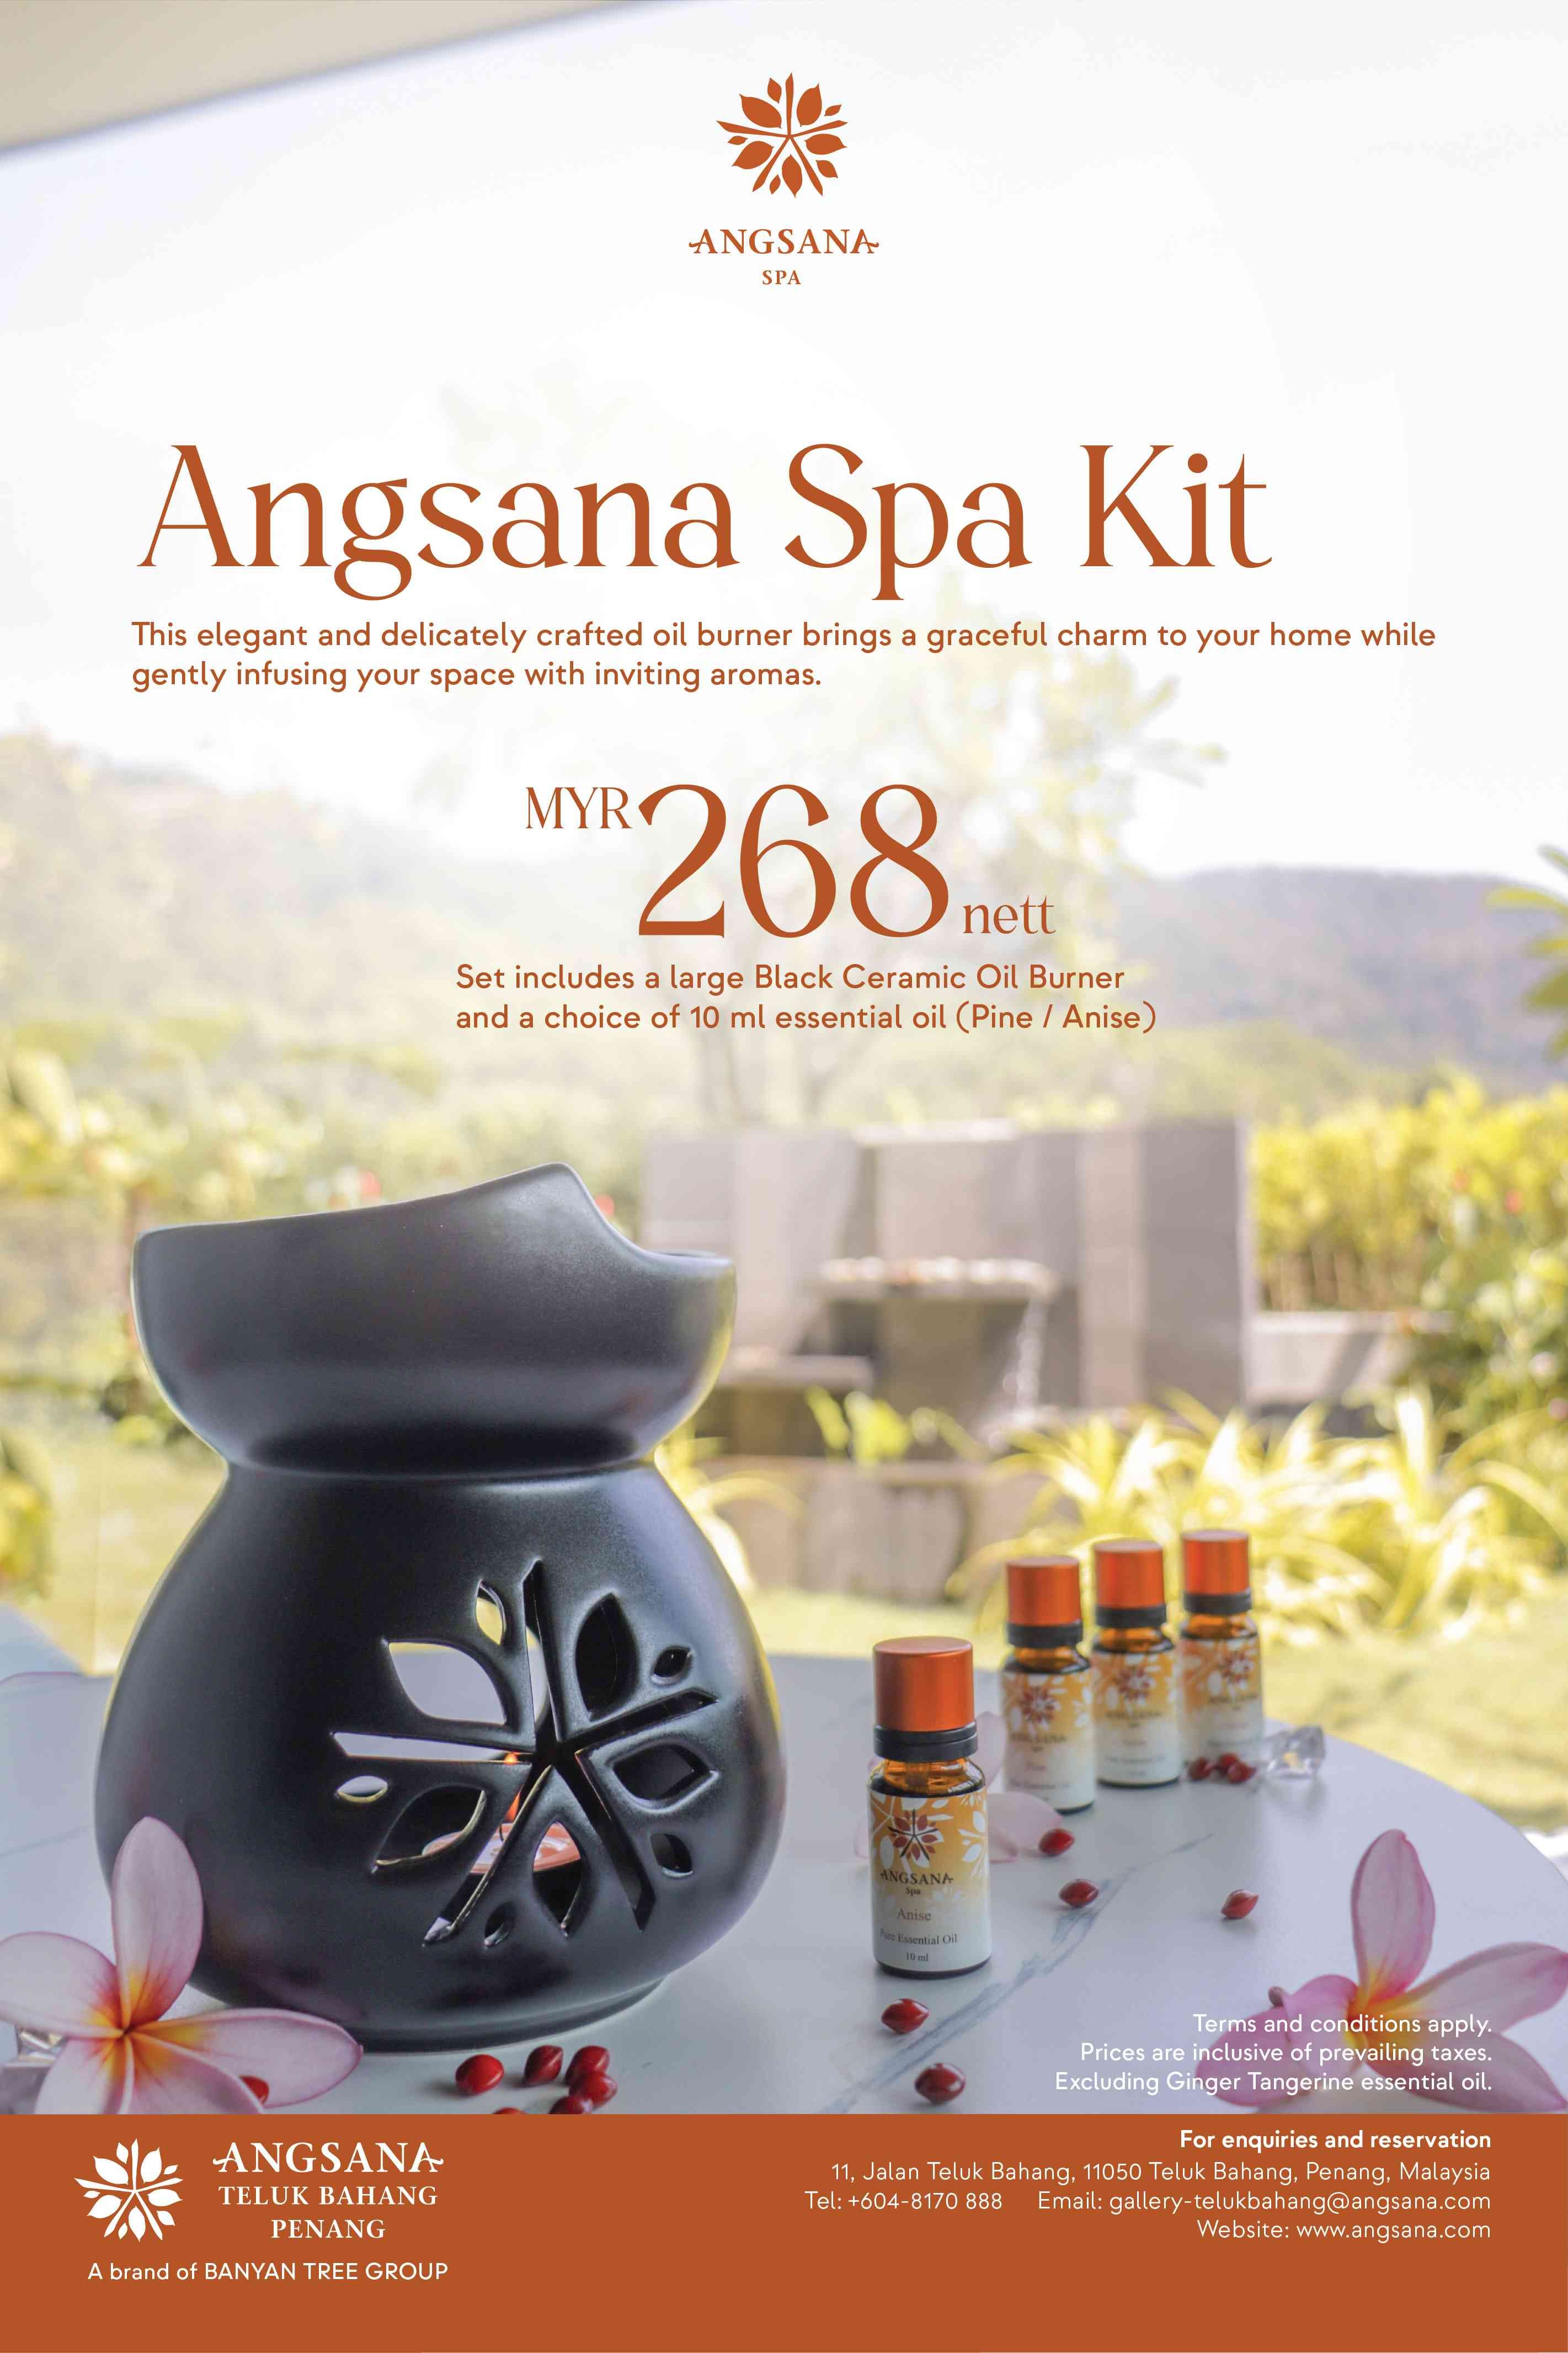 Angsana Spa Kit by Angsana Teluk Bahang